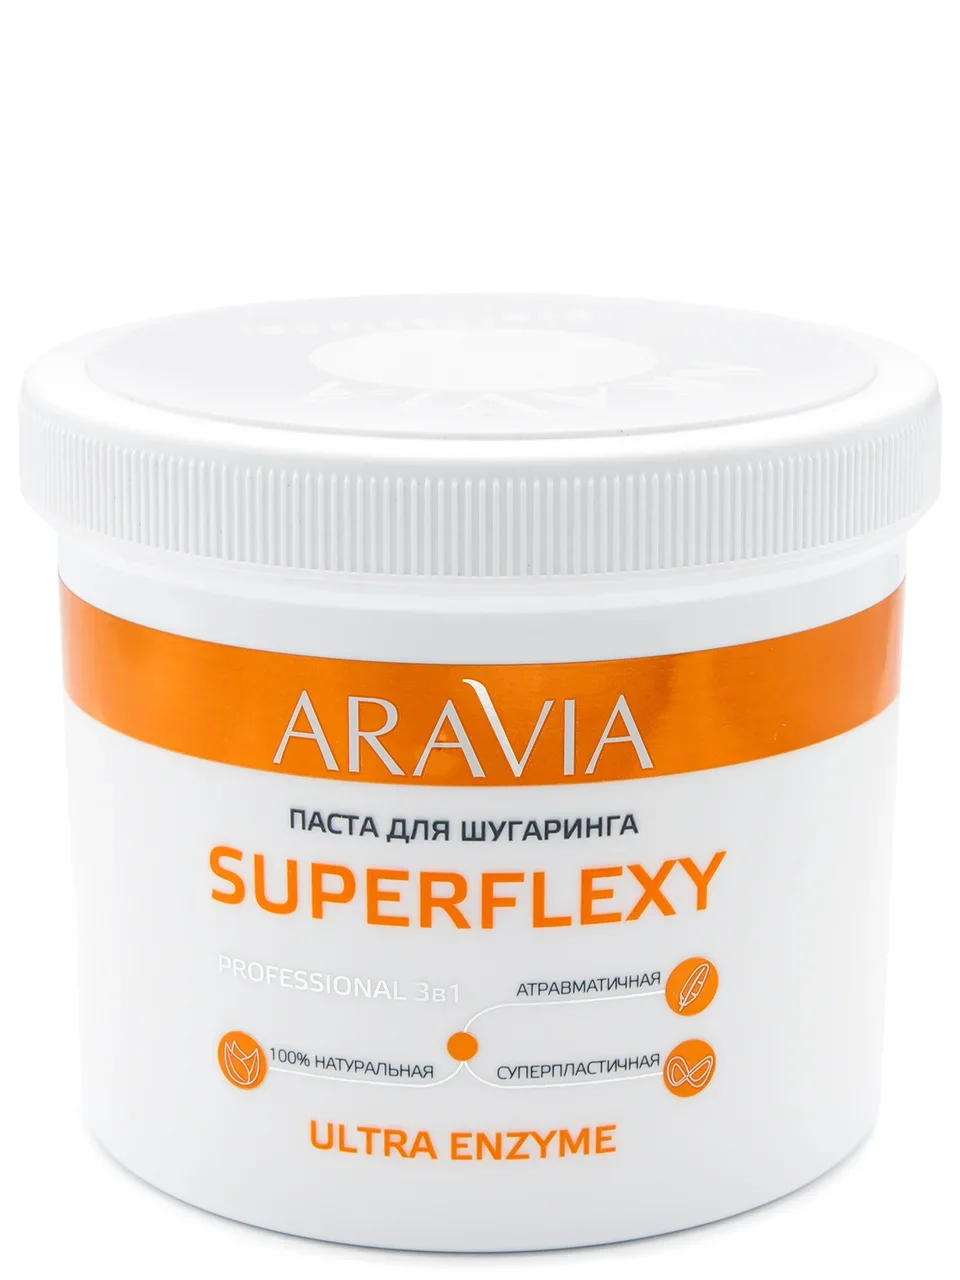 Паста для шугаринга Aravia Professional Superflexy Ultra Enzyme 750 г aravia паста для шугаринга superflexy pure gold 750 г